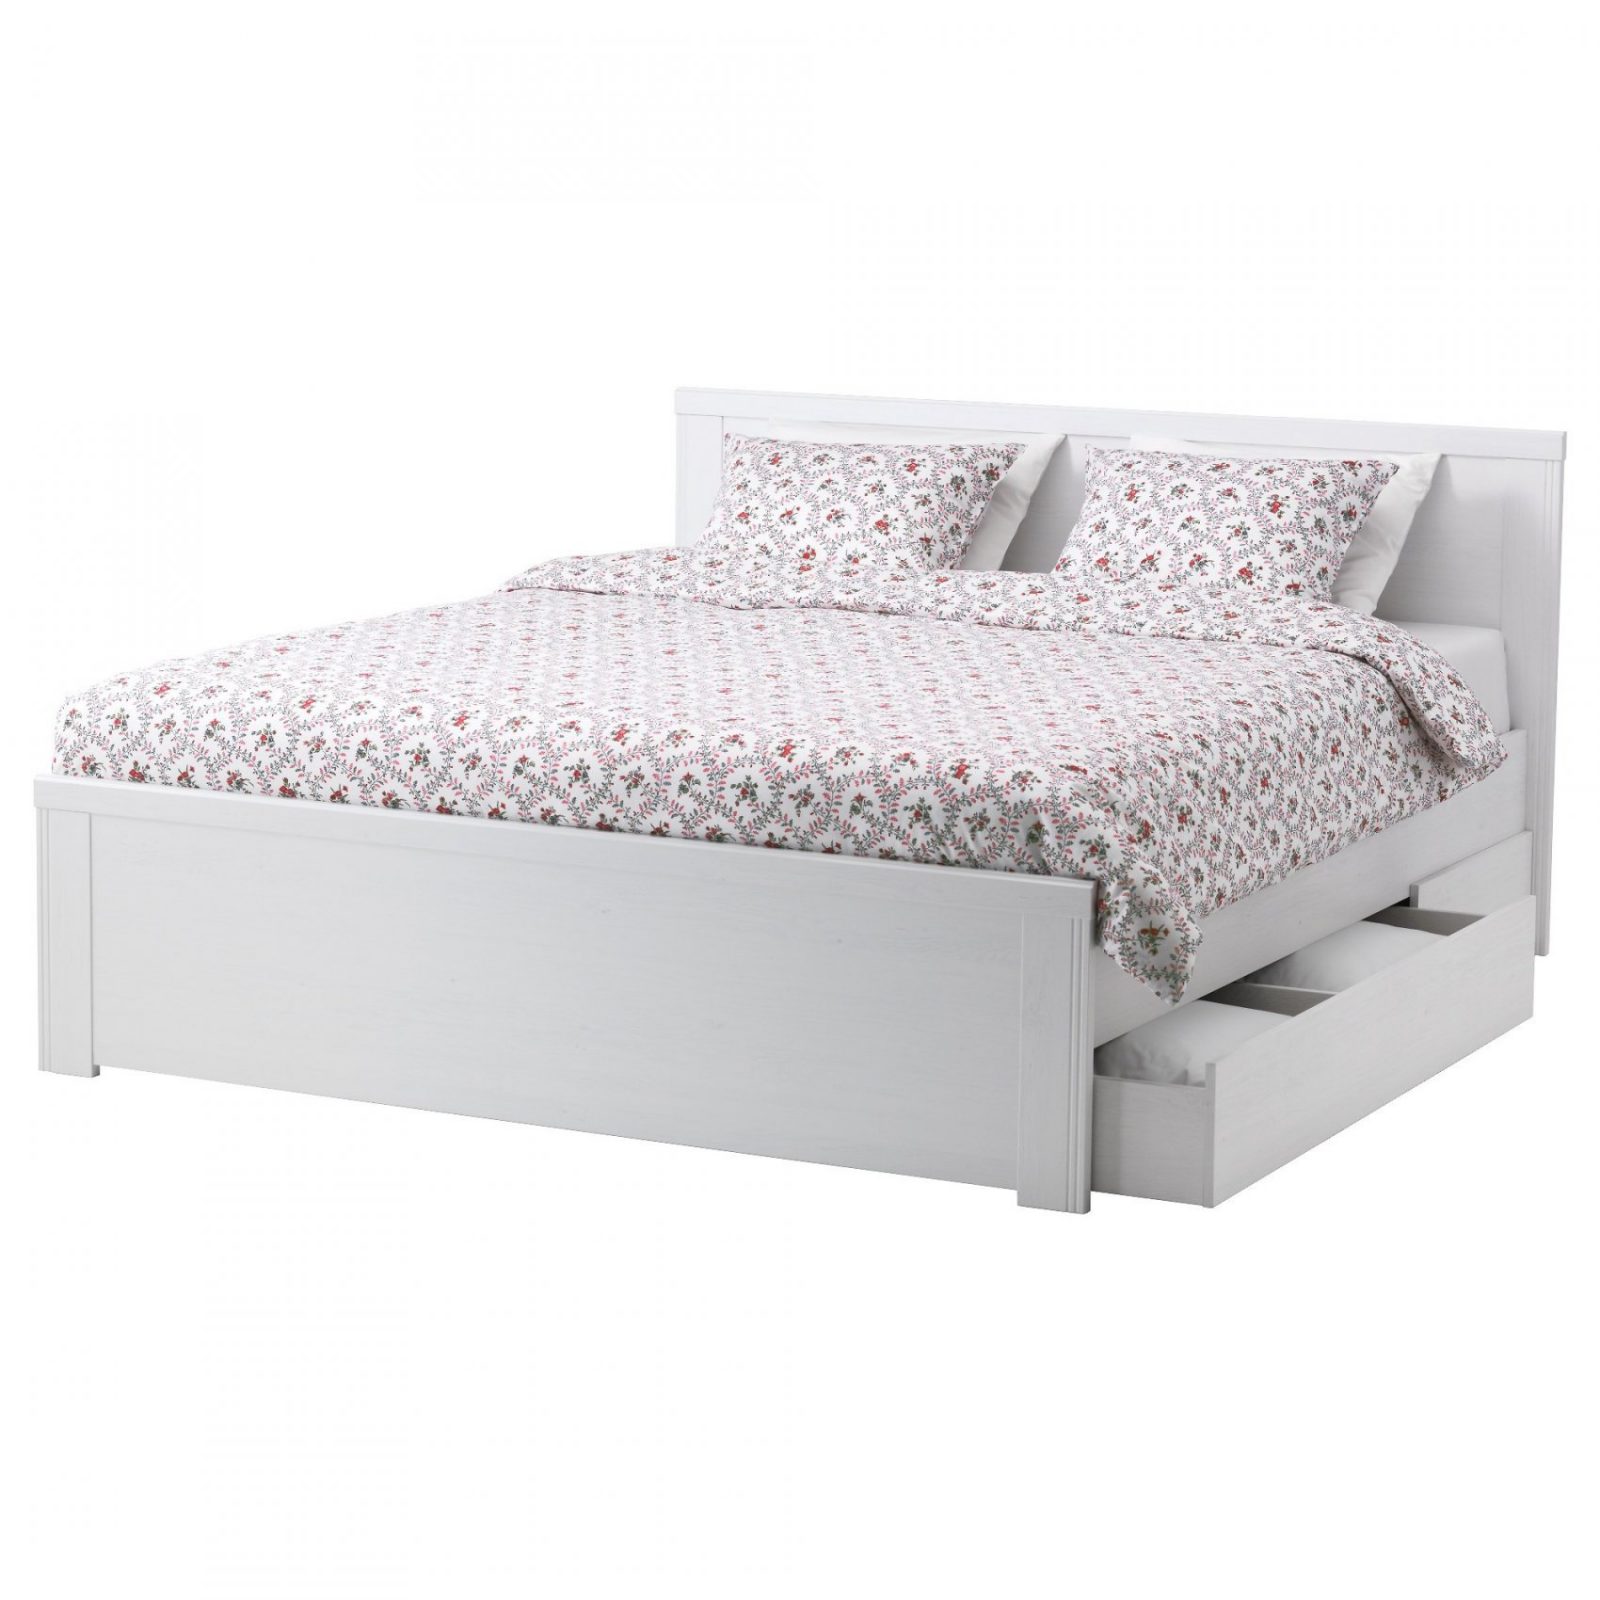 Nur Matratze Als Bett Plus Modern Cool Bett Ikea 140—200 Bescheiden von Nur Matratze Als Bett Bild